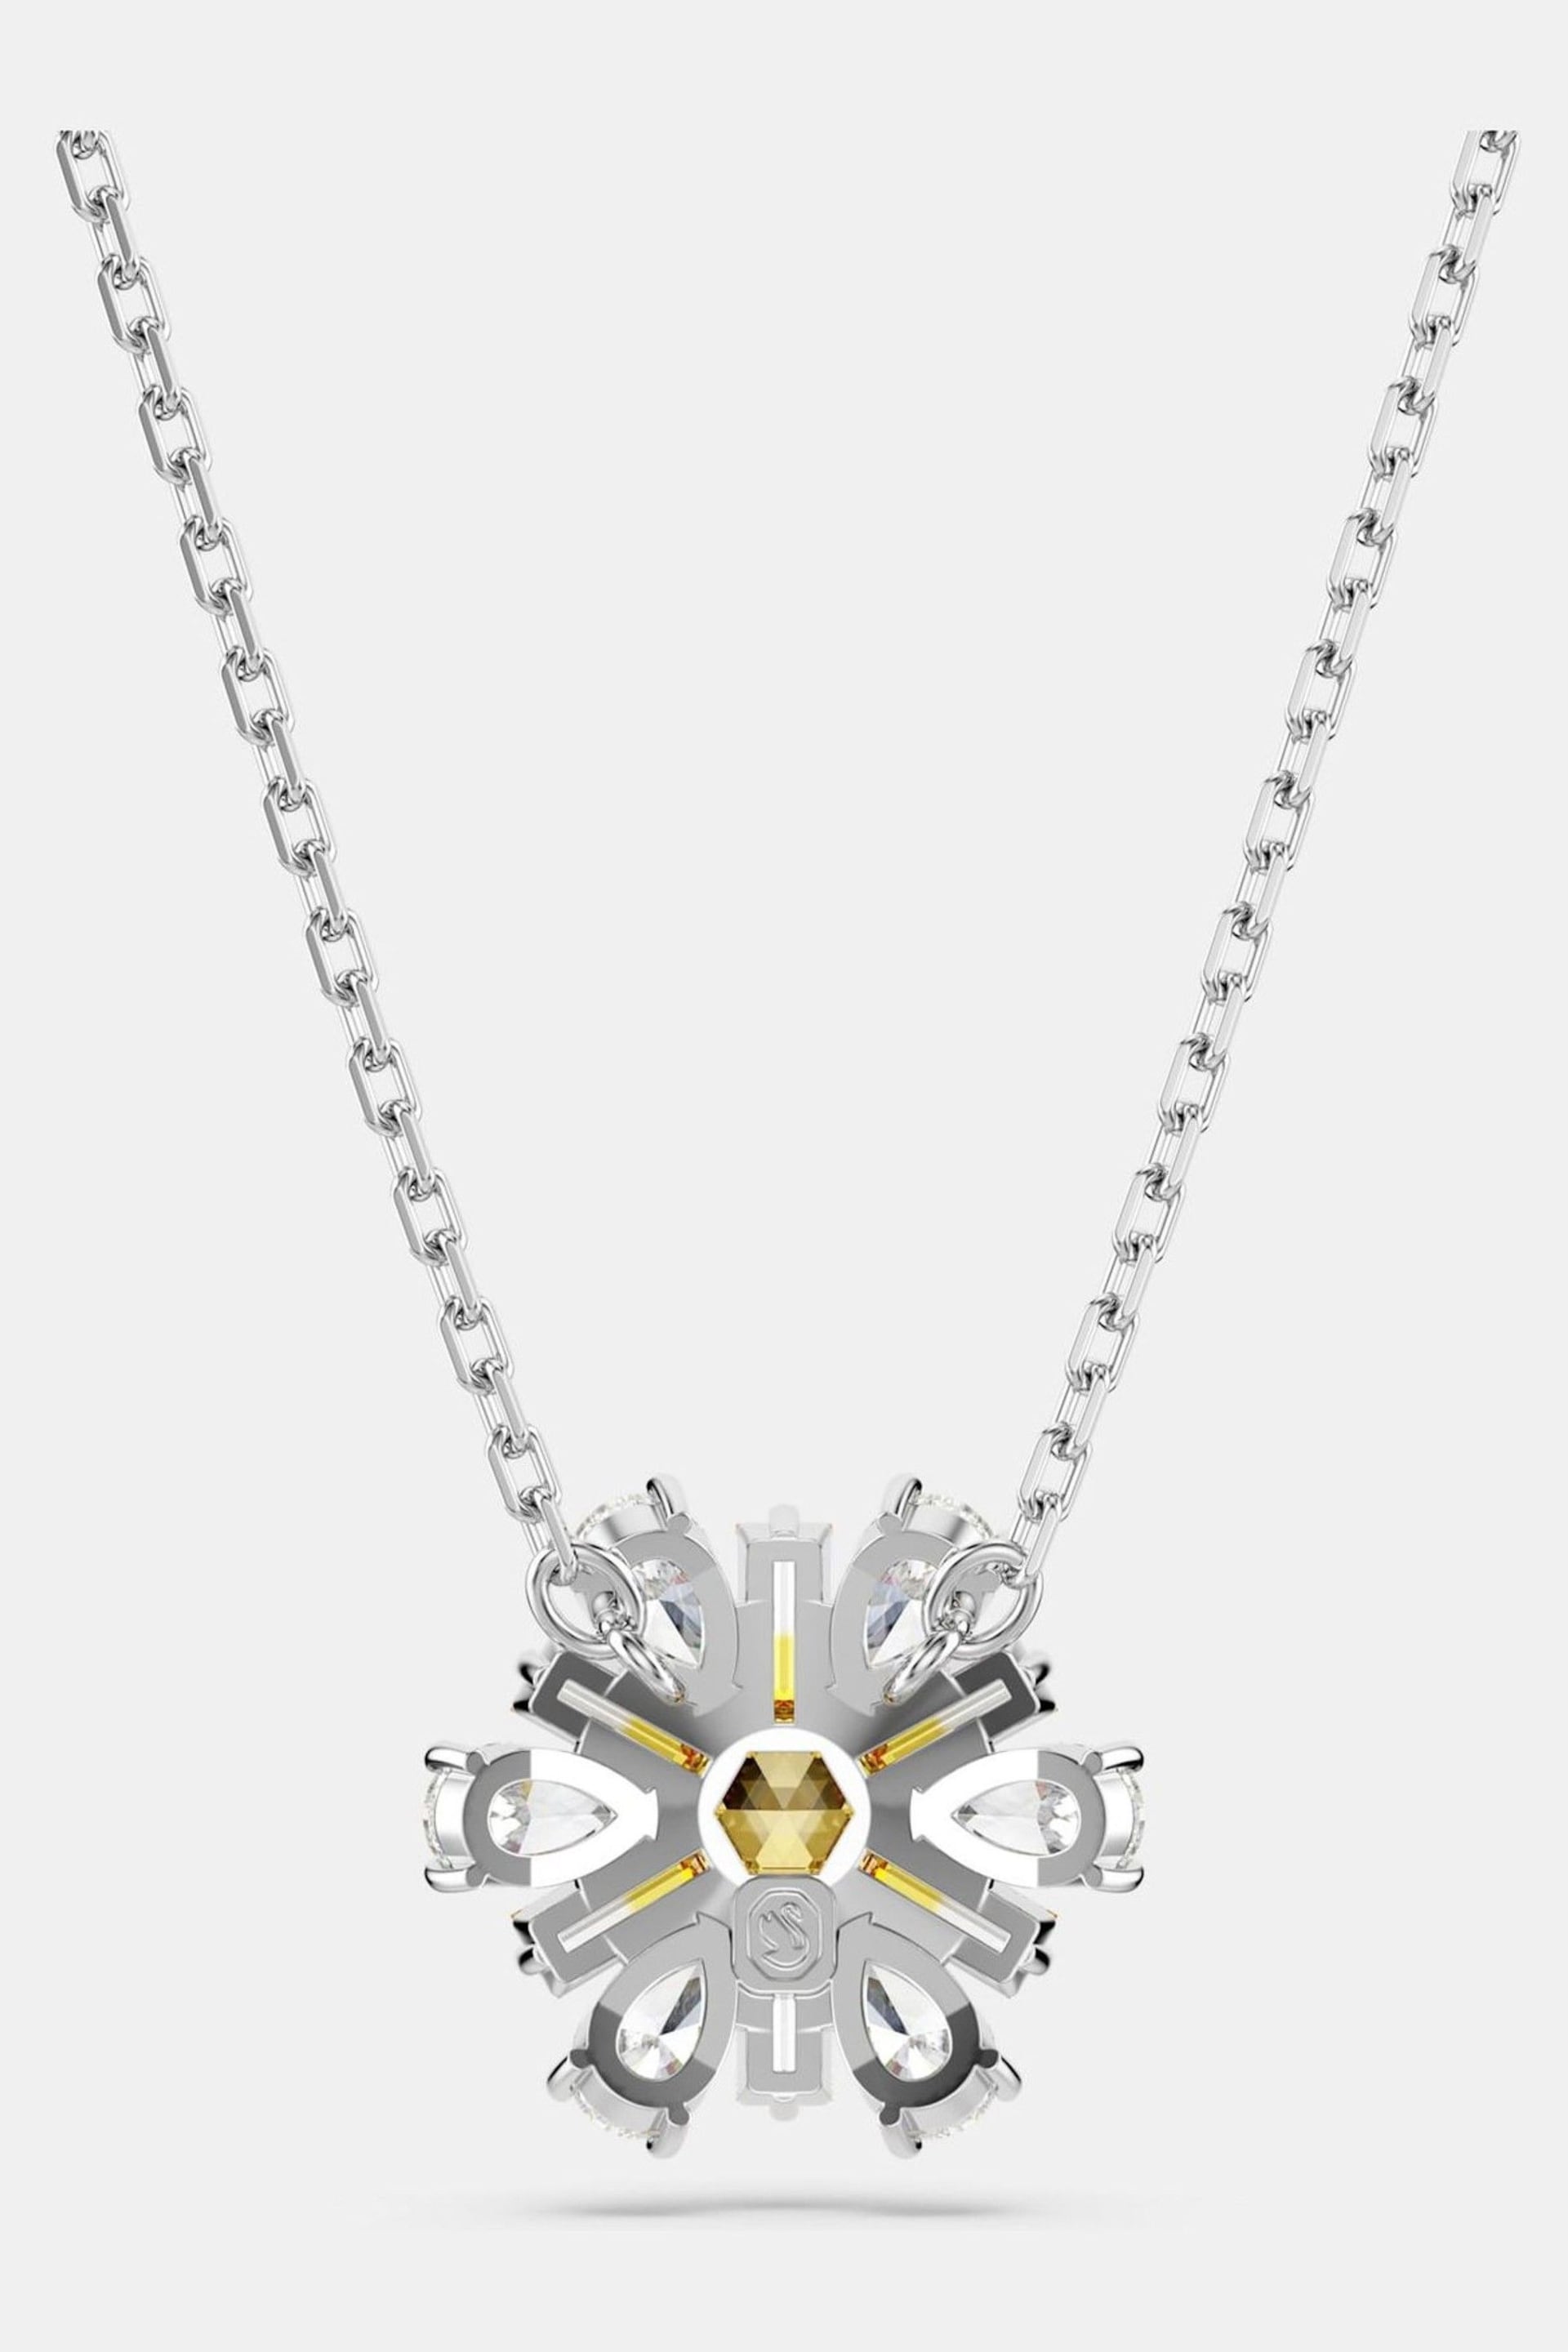 Swarovski Silver Daisy Crystal Necklace - Image 4 of 7